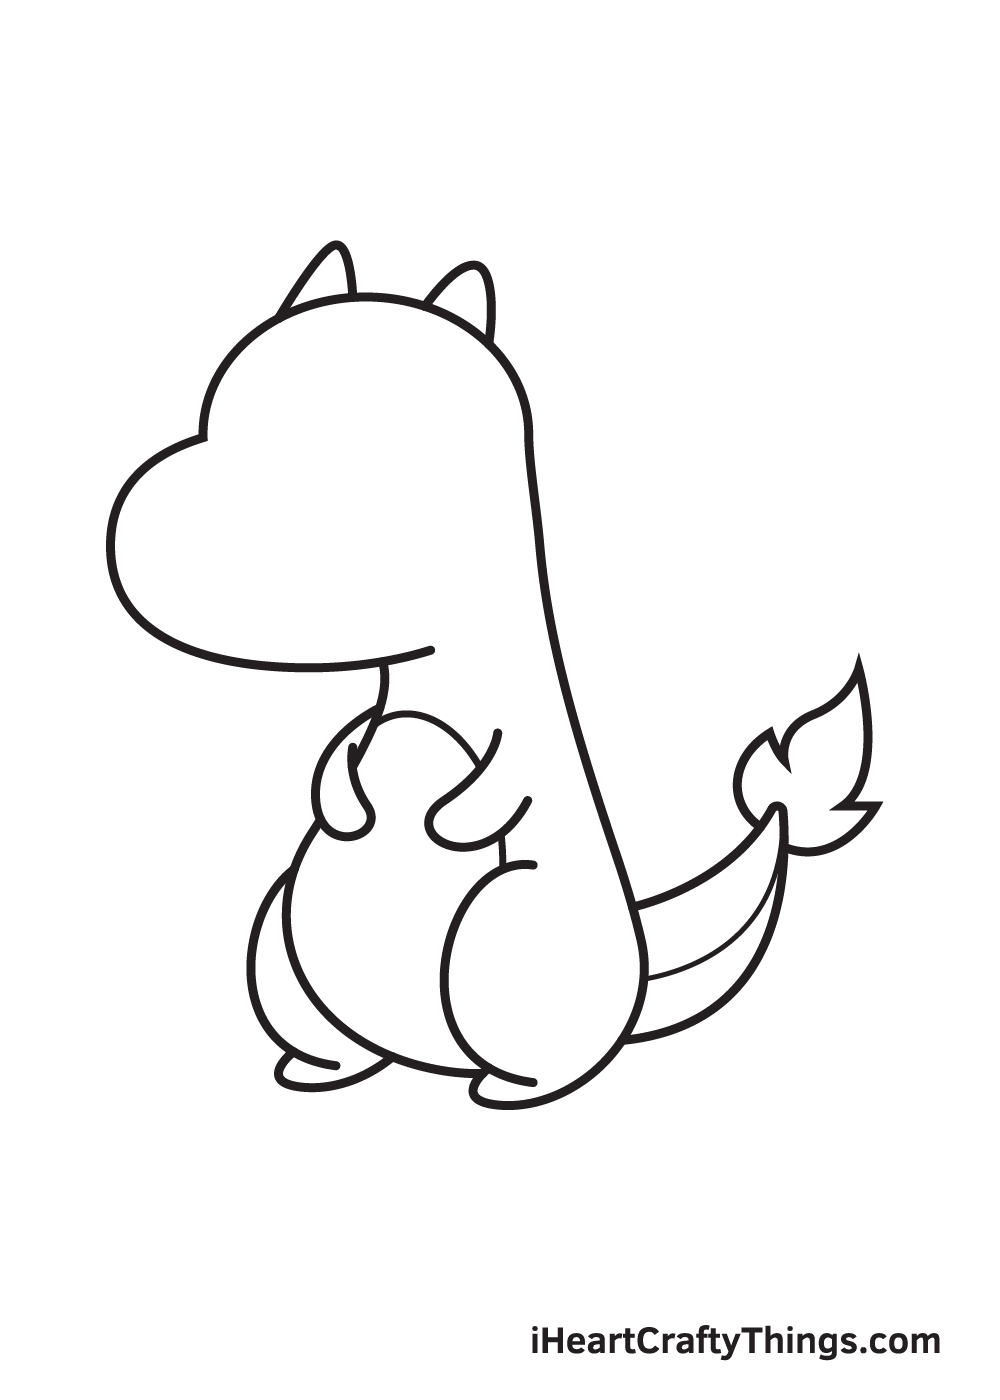 How to Draw Pokemon Charizard   YouTube